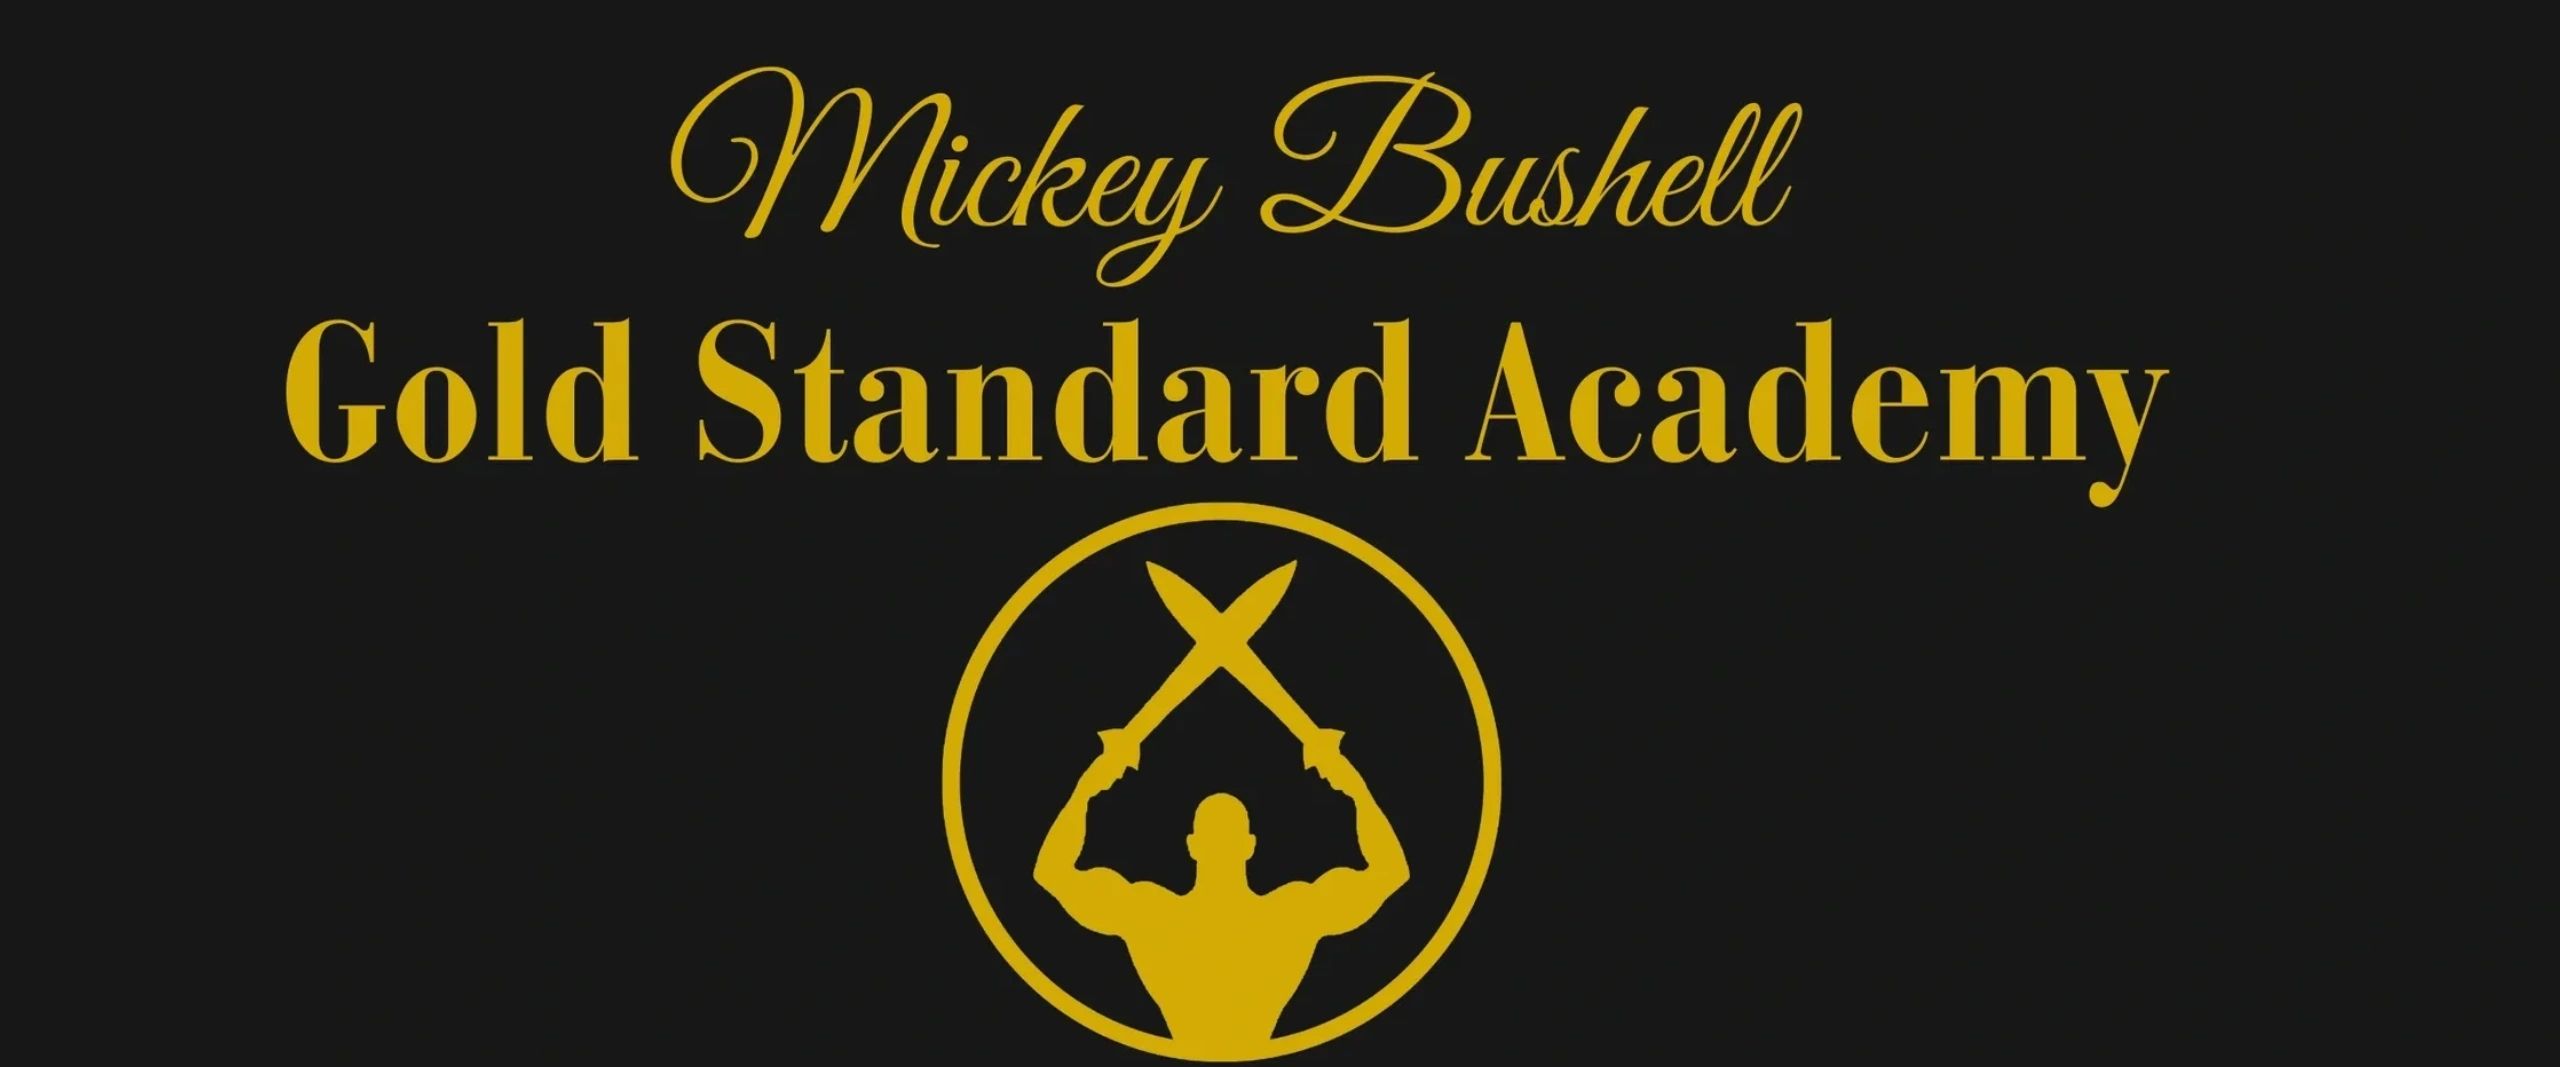 Mickey Bushell Gold Standard Academy with logo